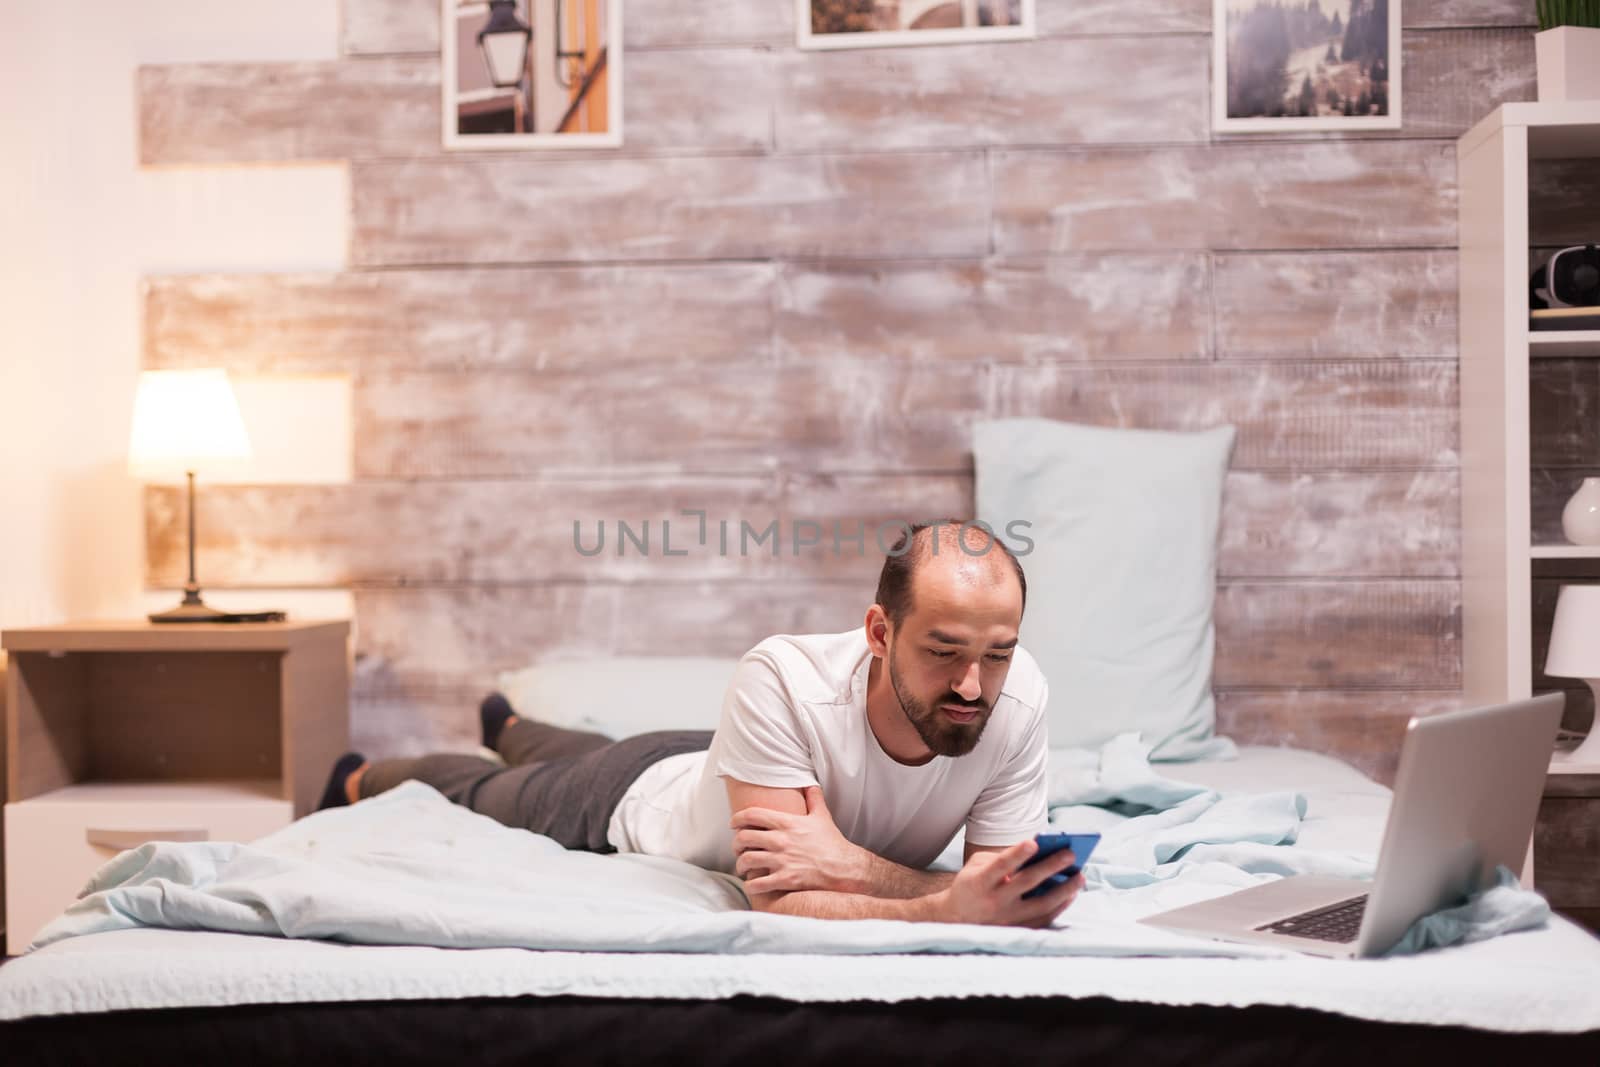 Man in bed at night wearing pajamas checking social media on smartphone.